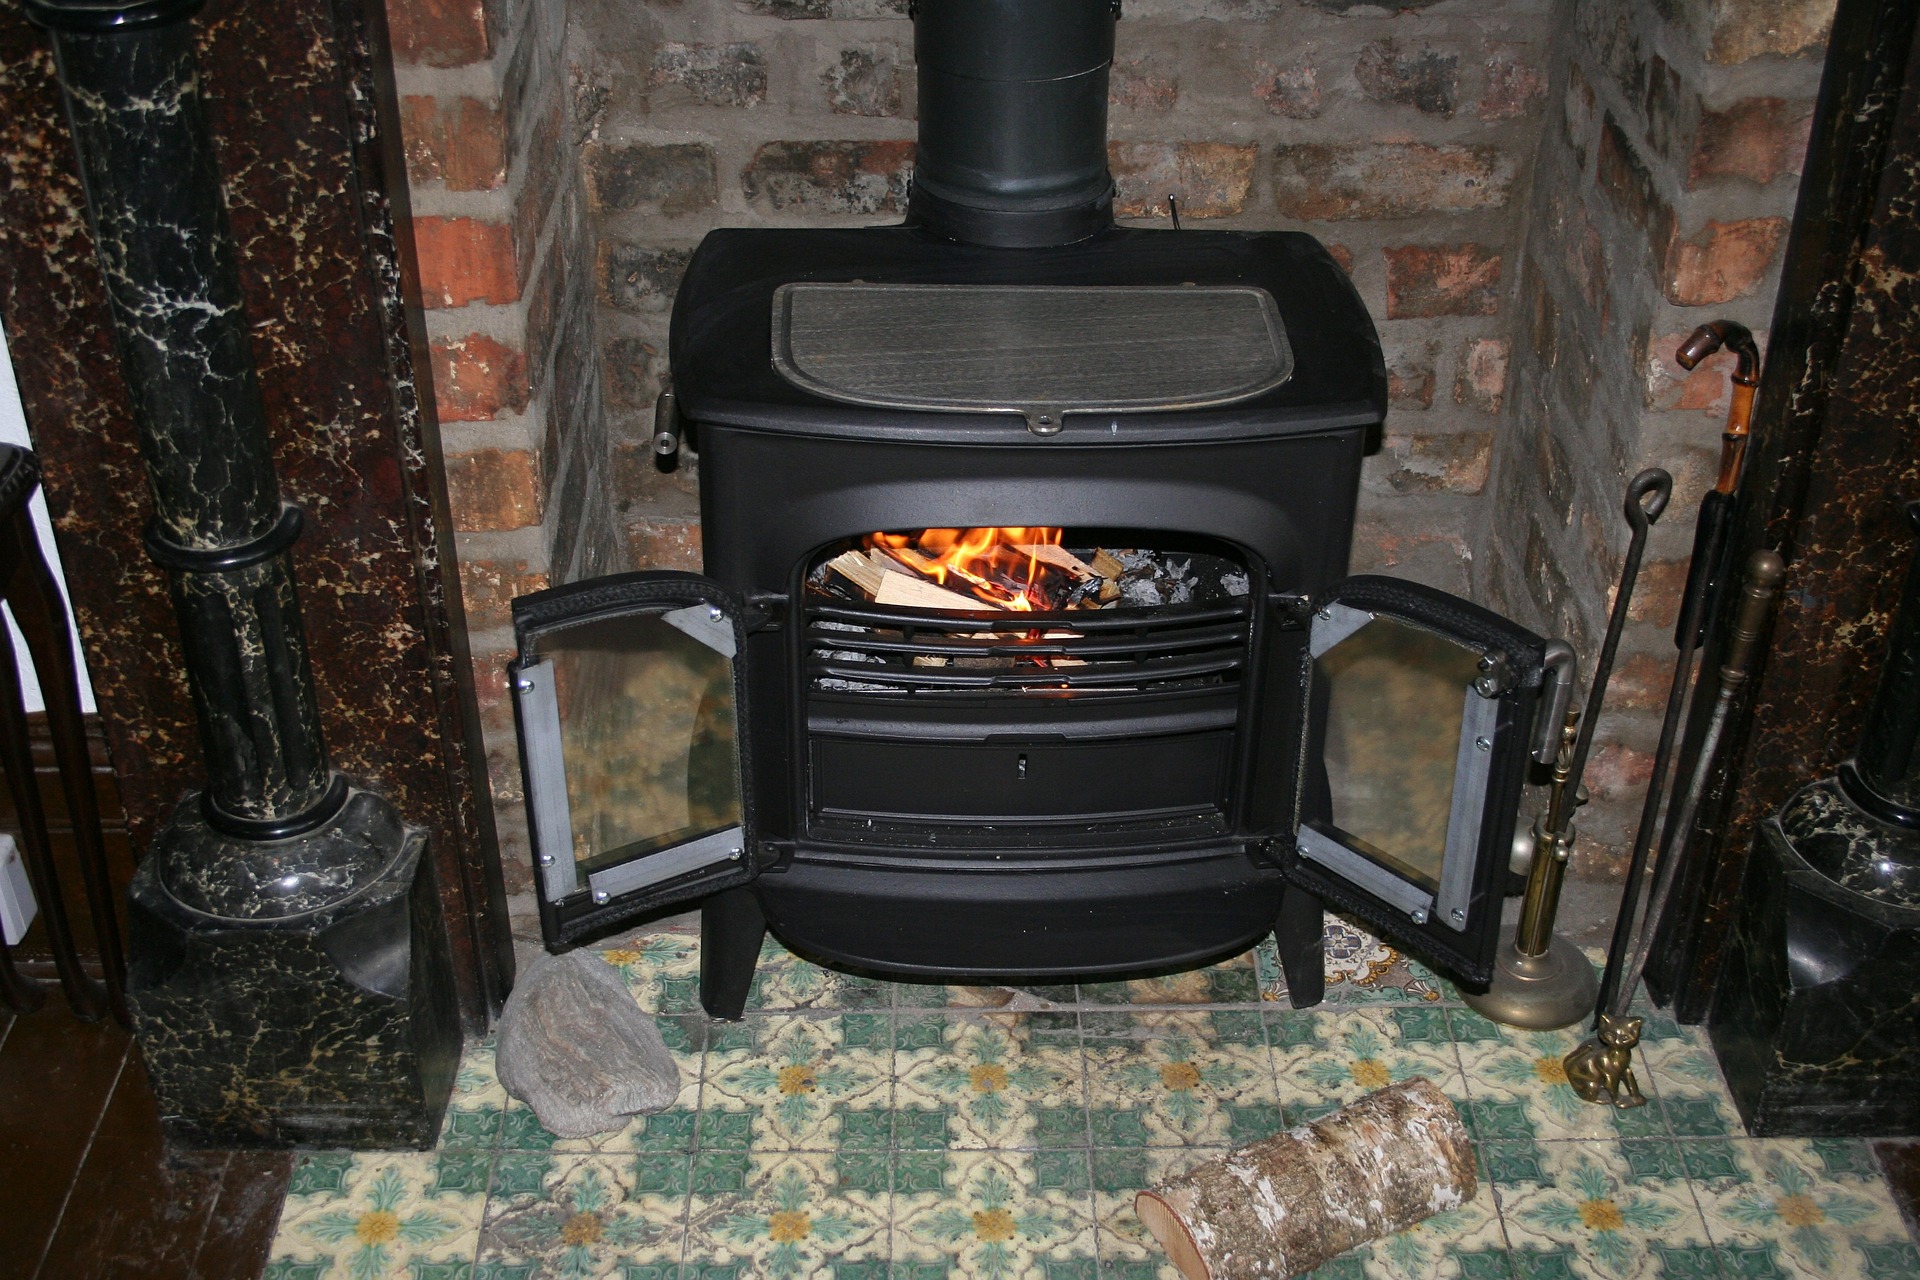 fireplace-gb016f9c44_1920